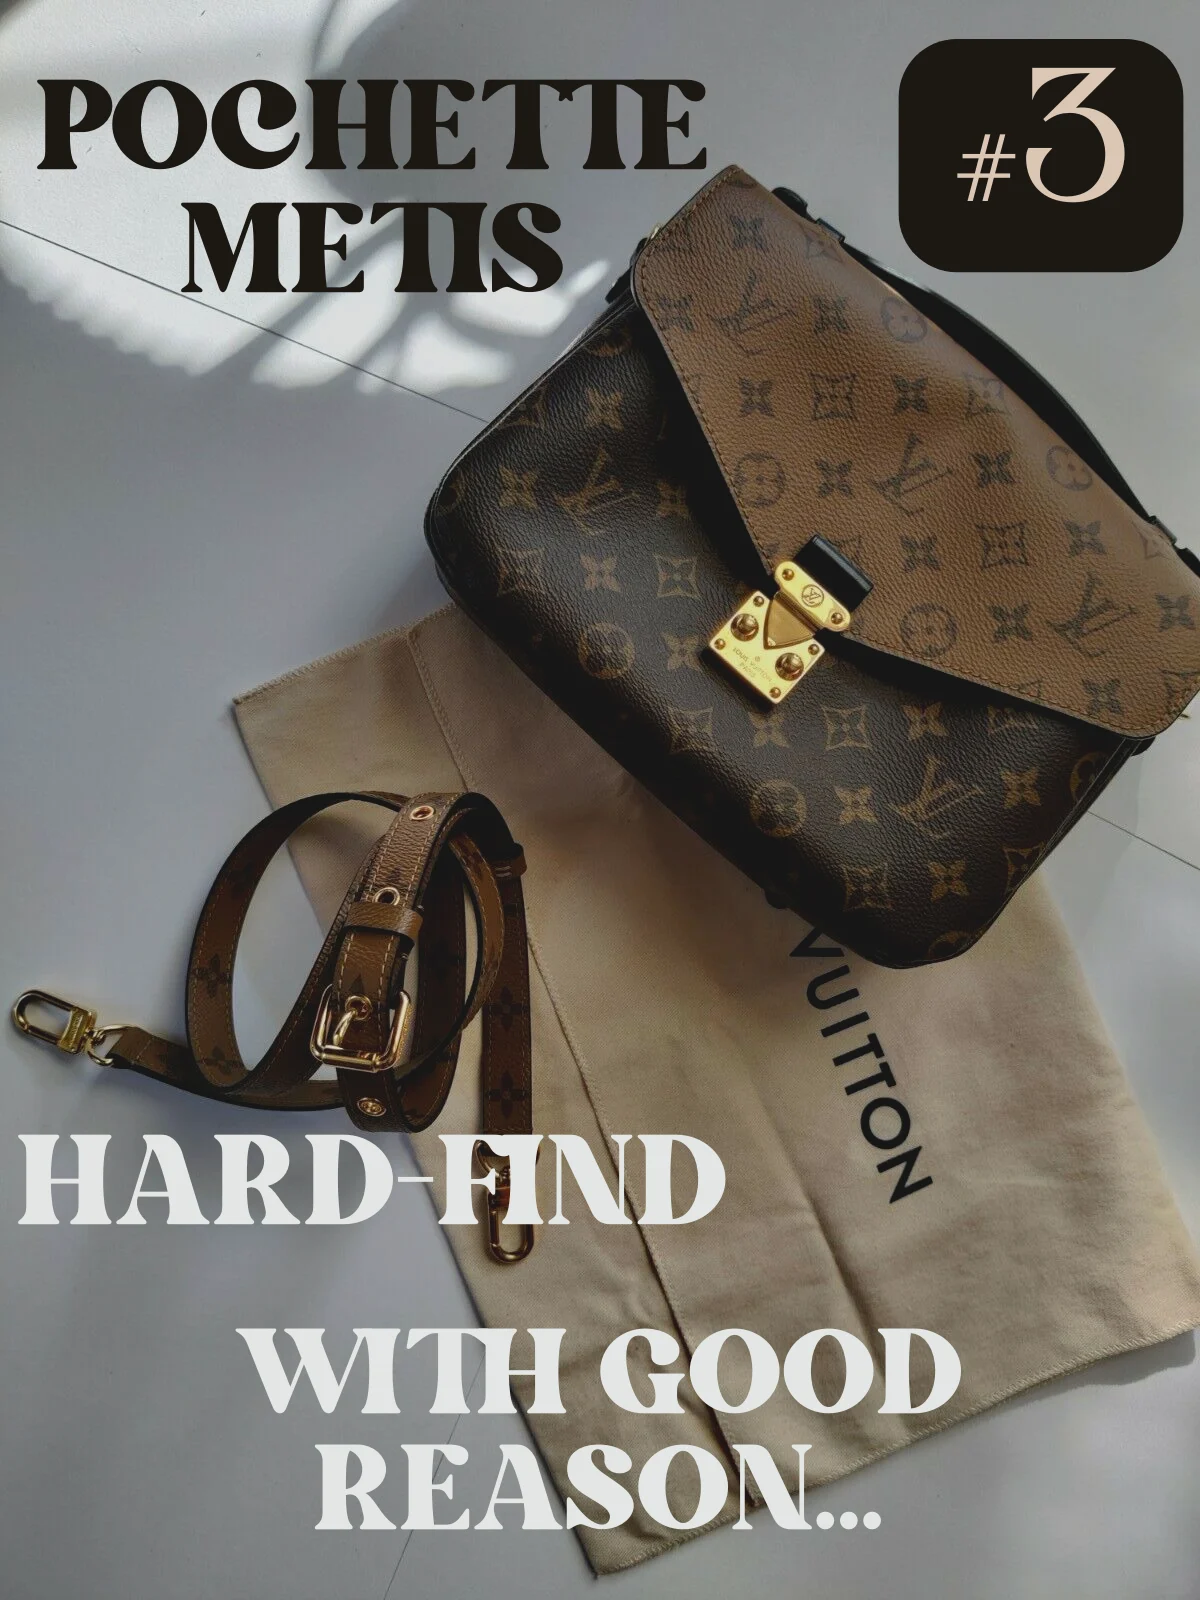 Louis Vuitton POCHETTE METIS, Hard-find With Good Reason